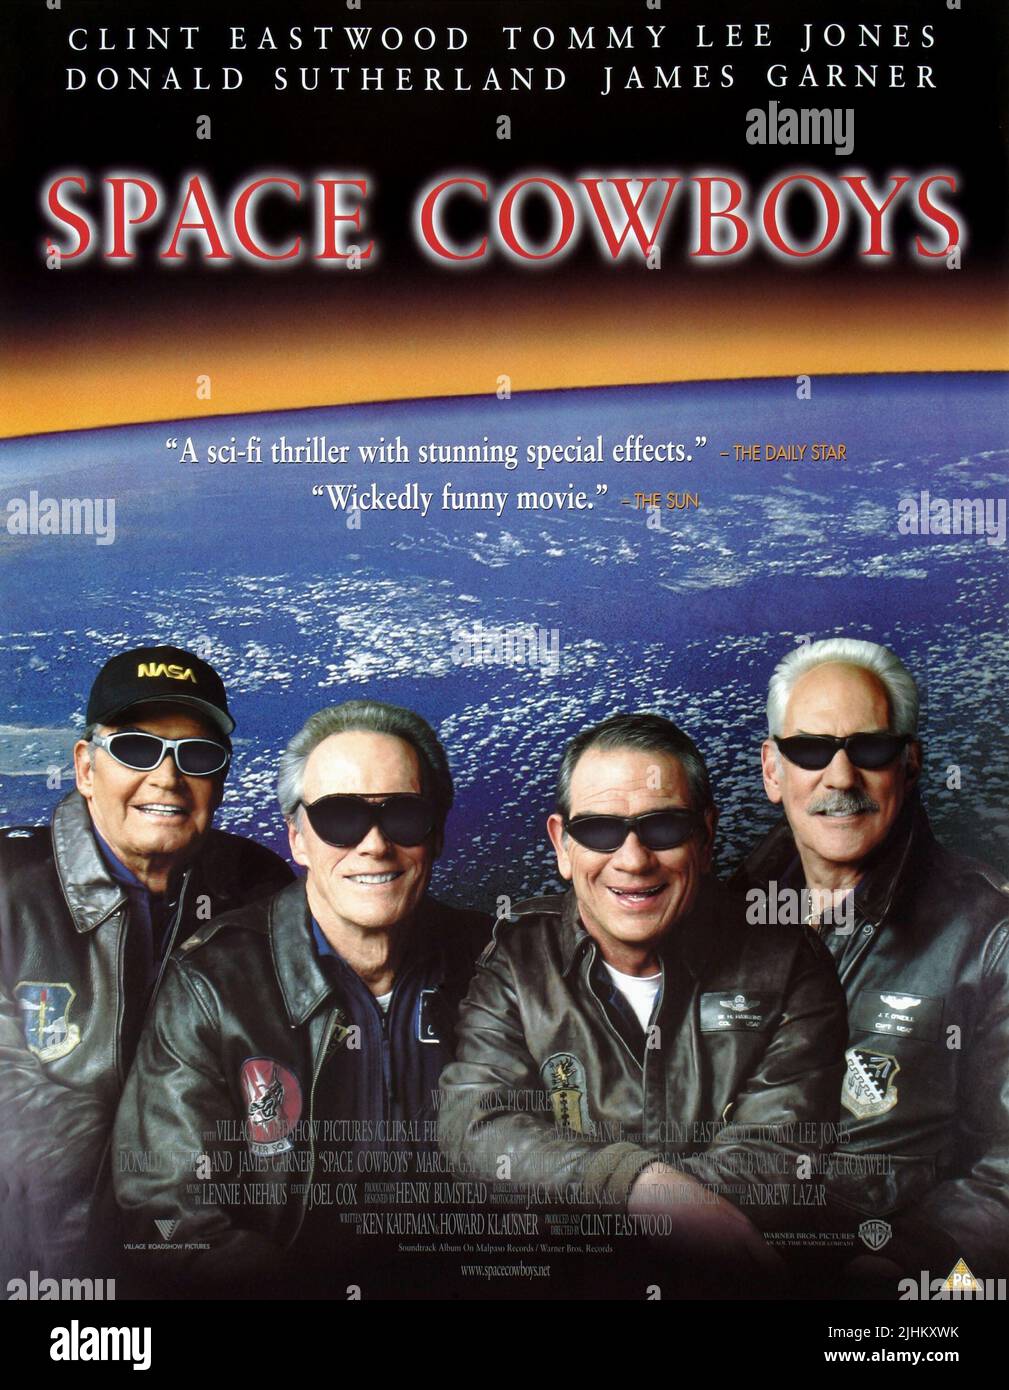 JAMES GARNER, Clint Eastwood, Tommy Lee Jones, Donald Sutherland POSTER, Space Cowboy, 2000 Foto Stock